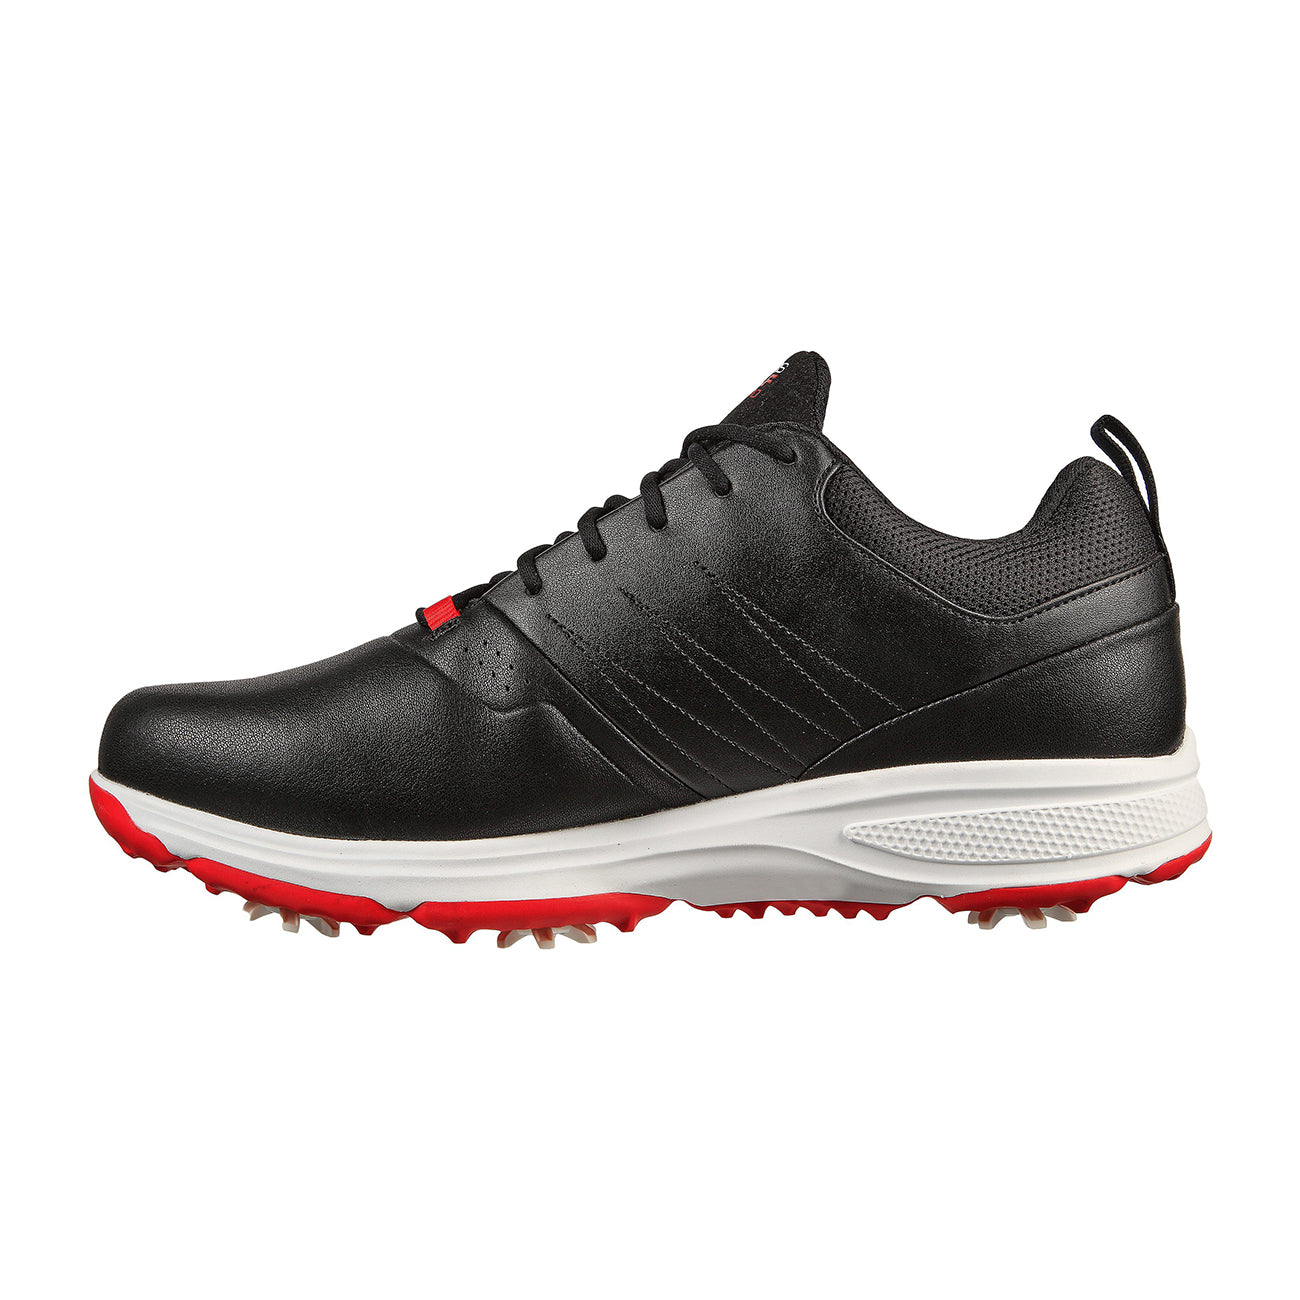 Skechers Go Golf Torque - Pro Golf Shoes 2021